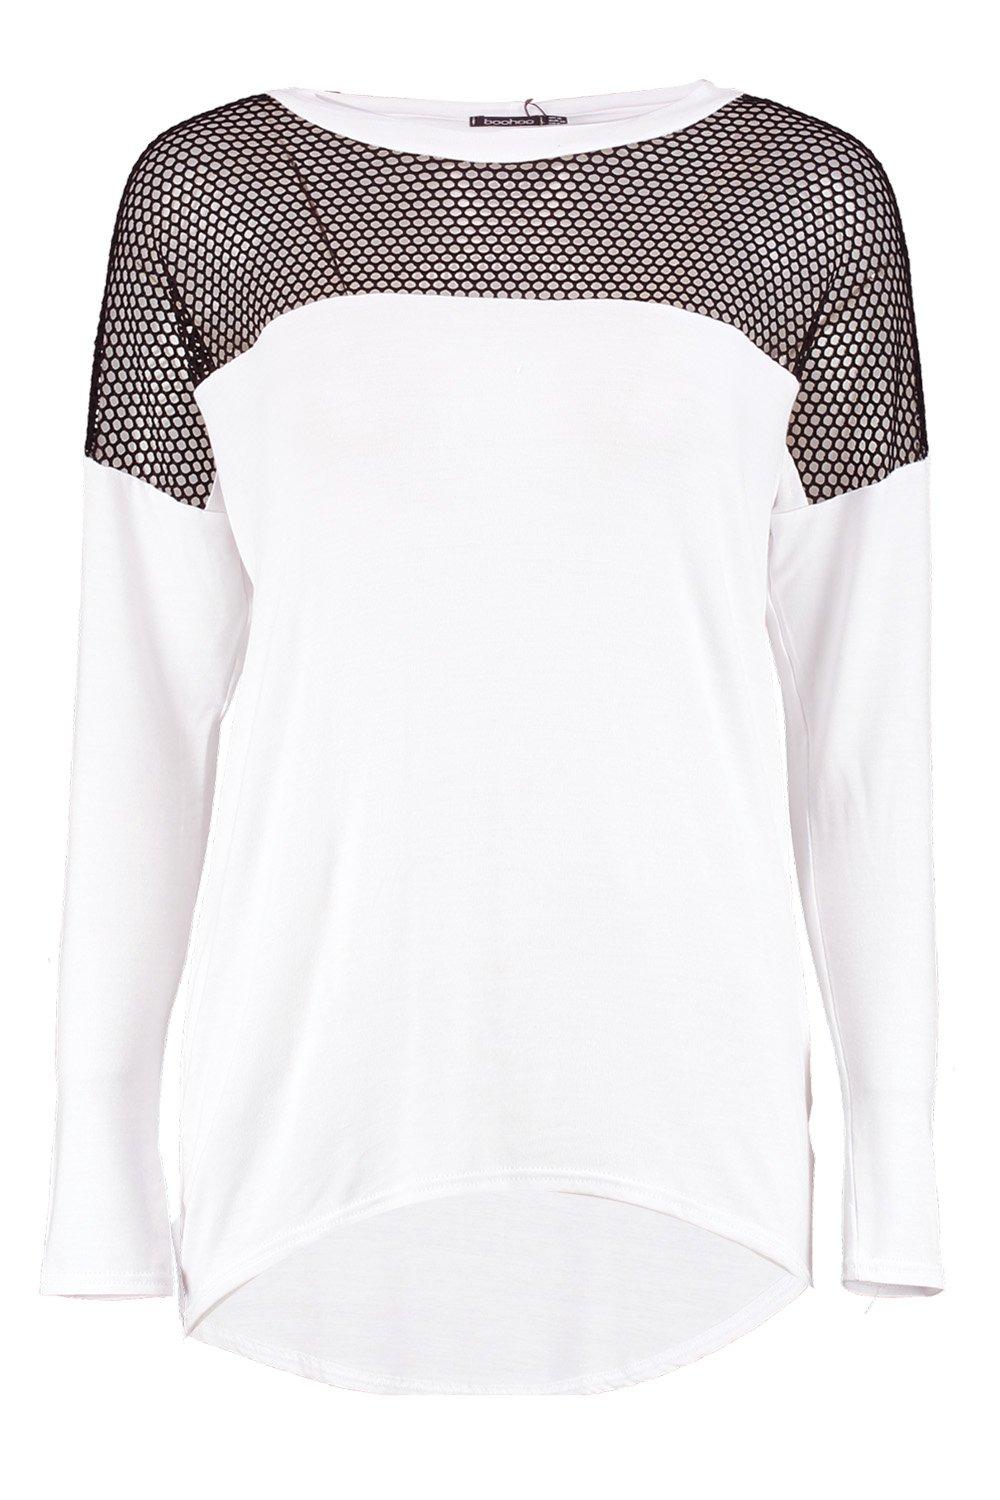 Boohoo Womens Hailey Fishnet Mesh Long Sleeve Jersey T-Shirt | eBay